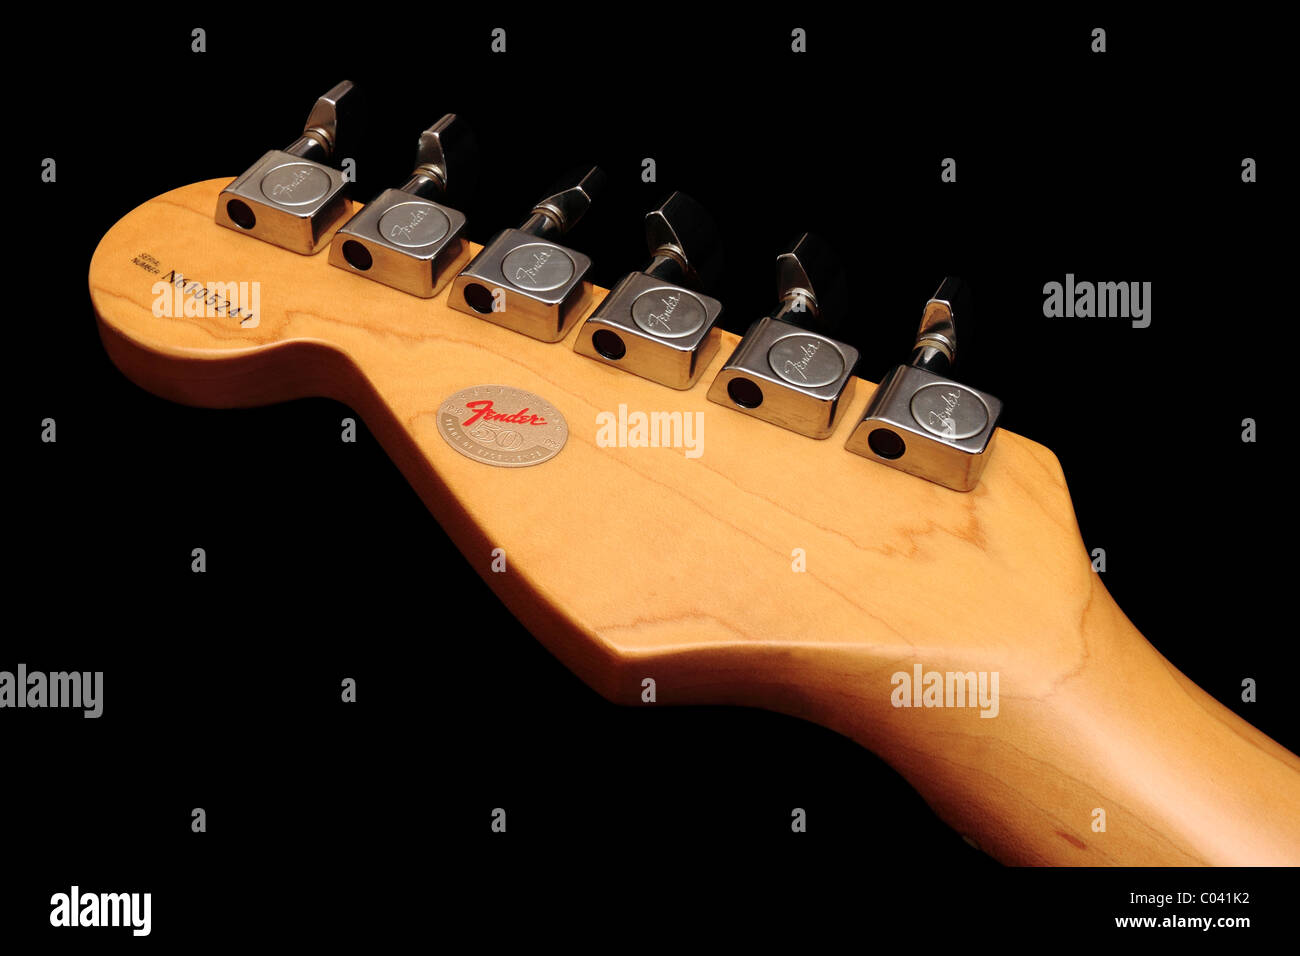 Fender American Standard Stratocaster headstock on black background Stock Photo